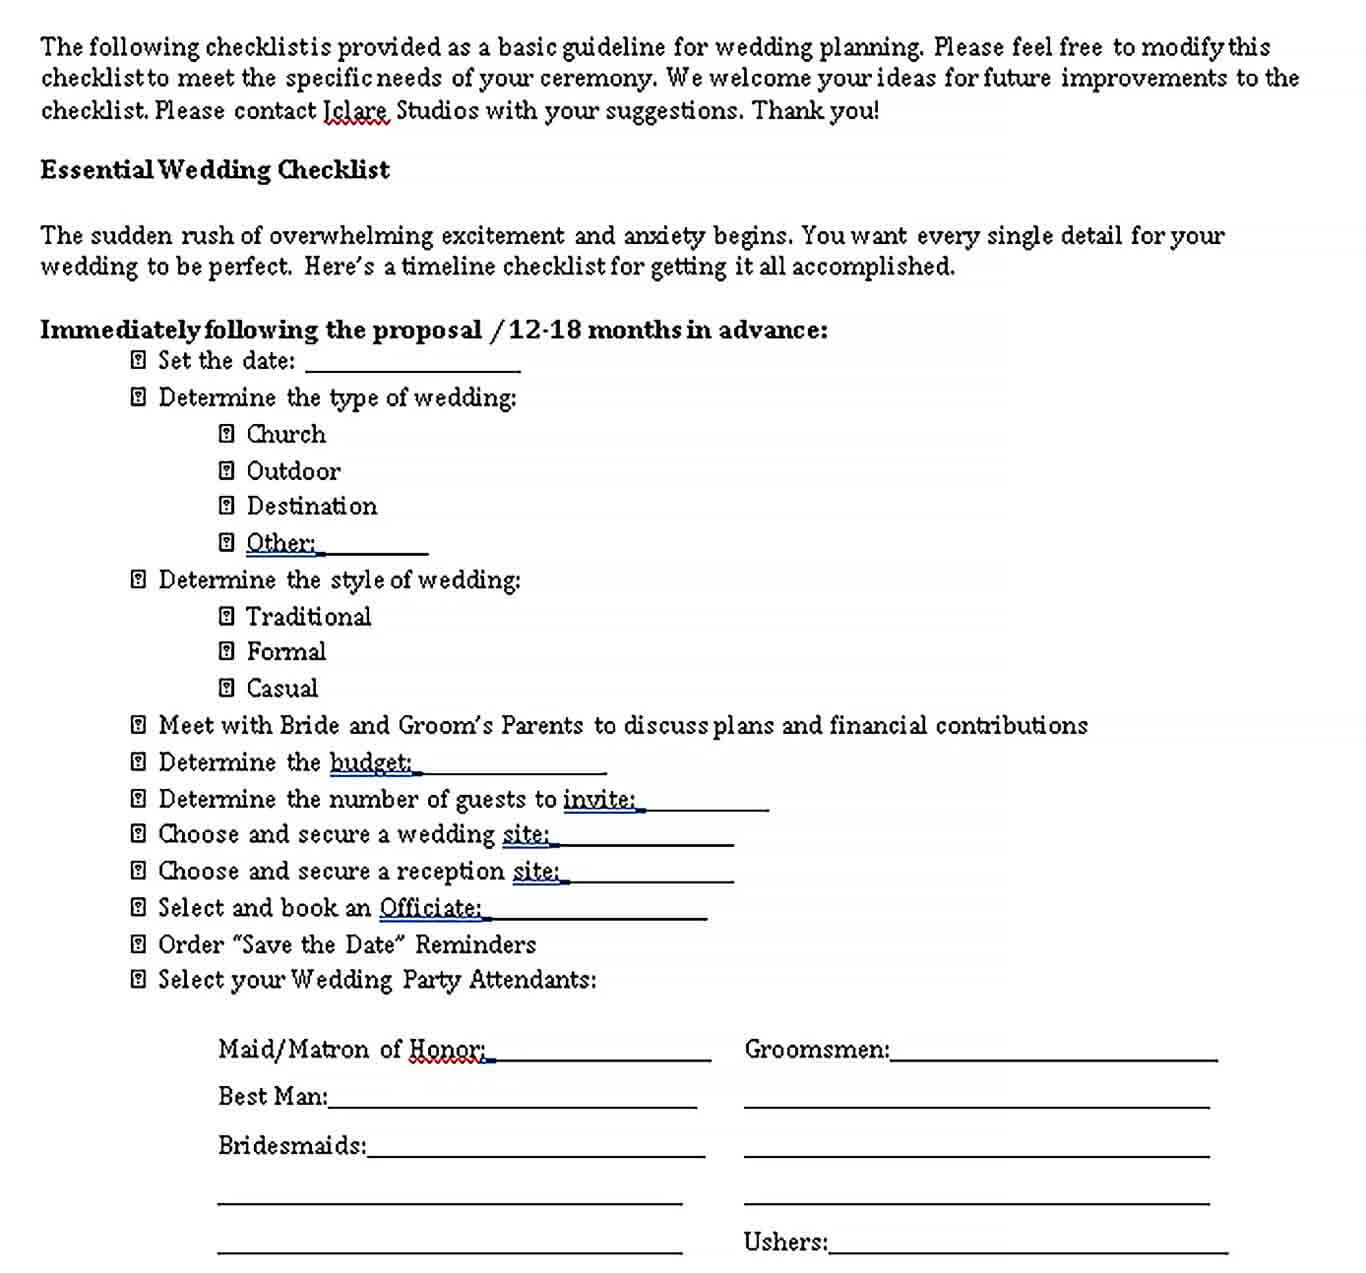 Sample Essential Wedding Checklist 1